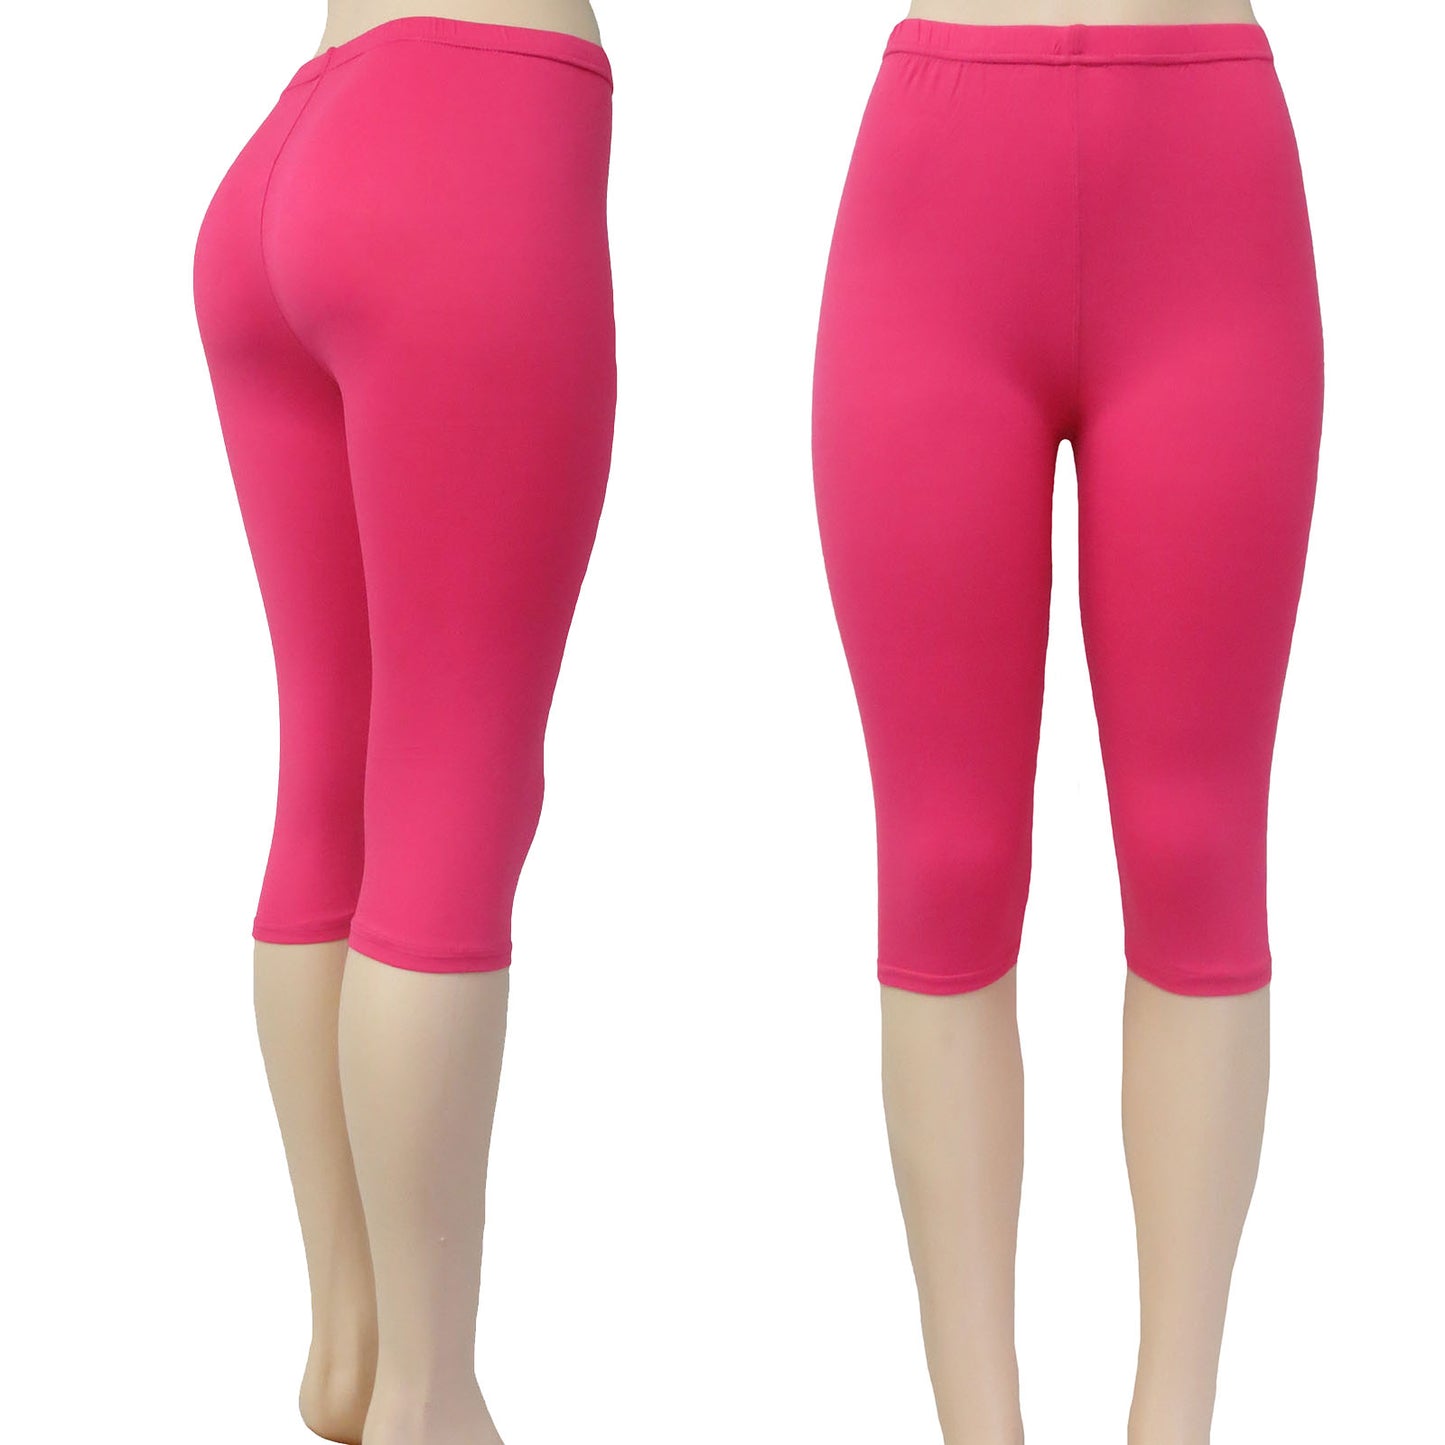 Alessa Vanessa Wholesale Solid Color Capri Leggings in Pink